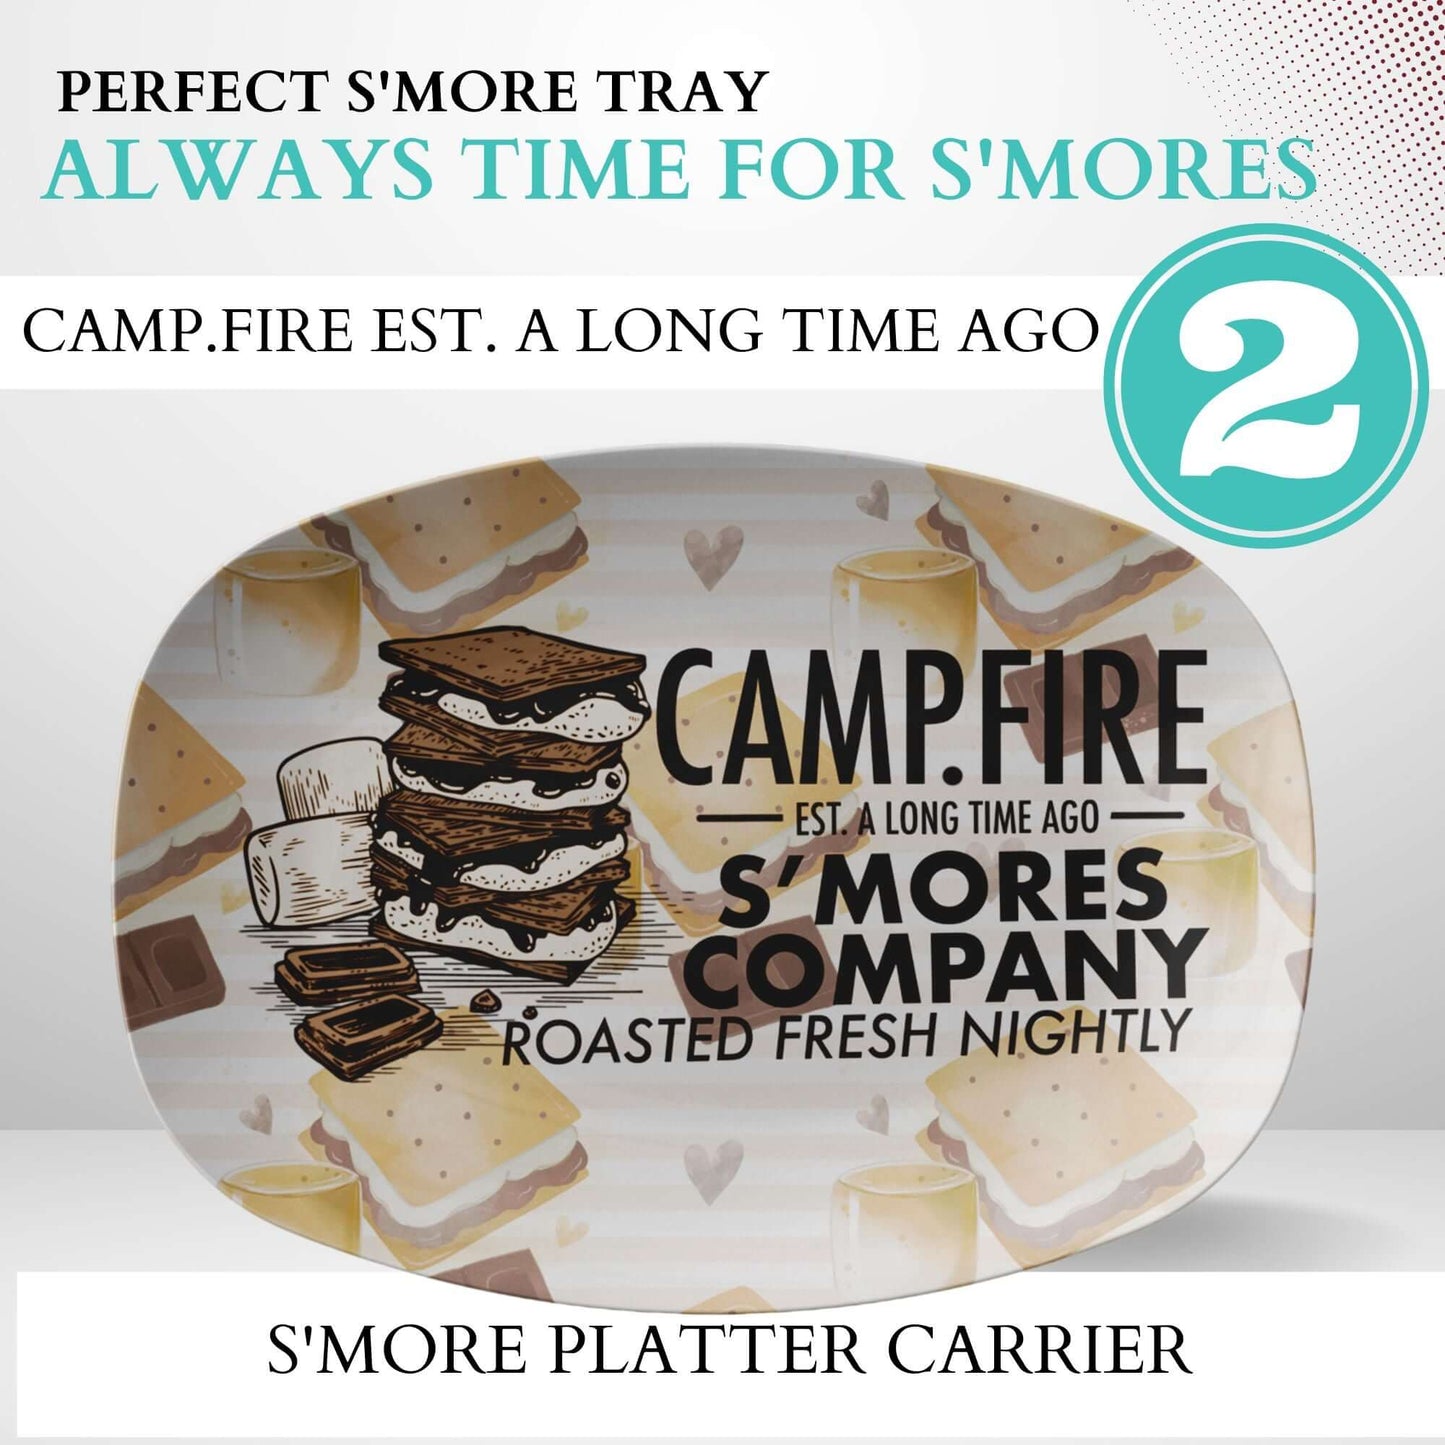 S'mores Tray, Smores Serving Platter, Making Smore Memories